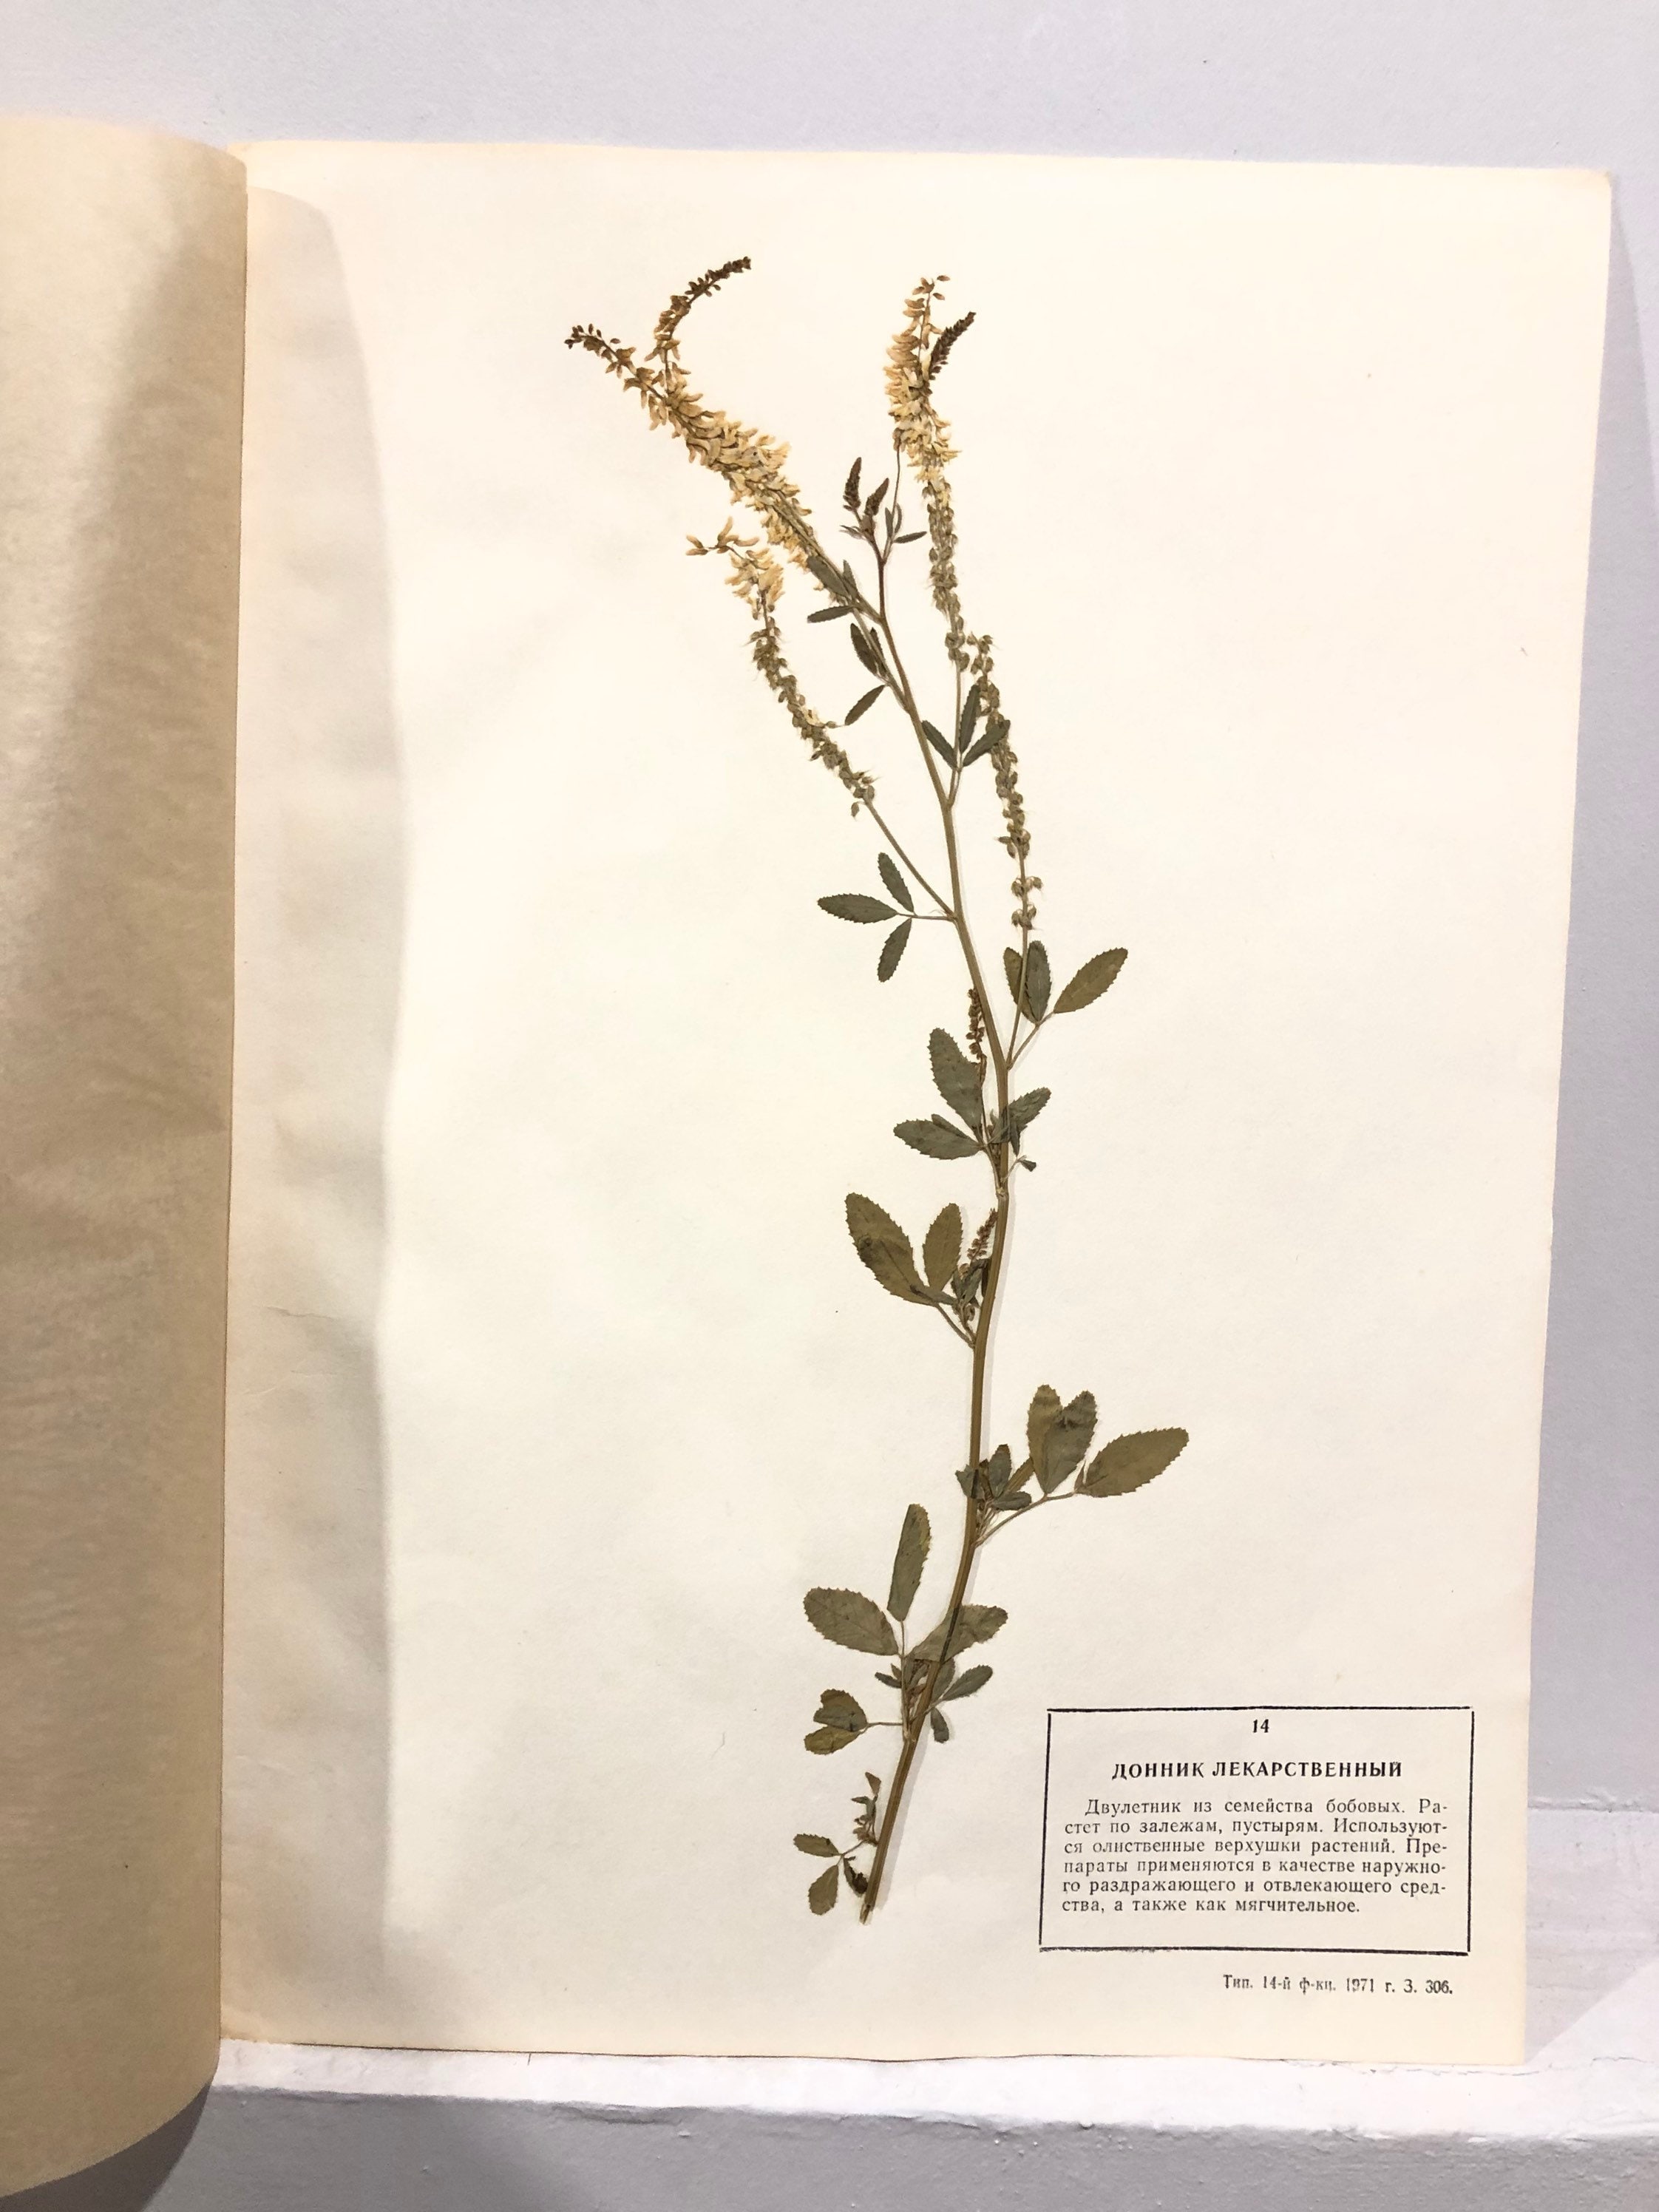 Blank Vintage Scrapbook Herbarium Mockup Empty Stock Photo 557486179